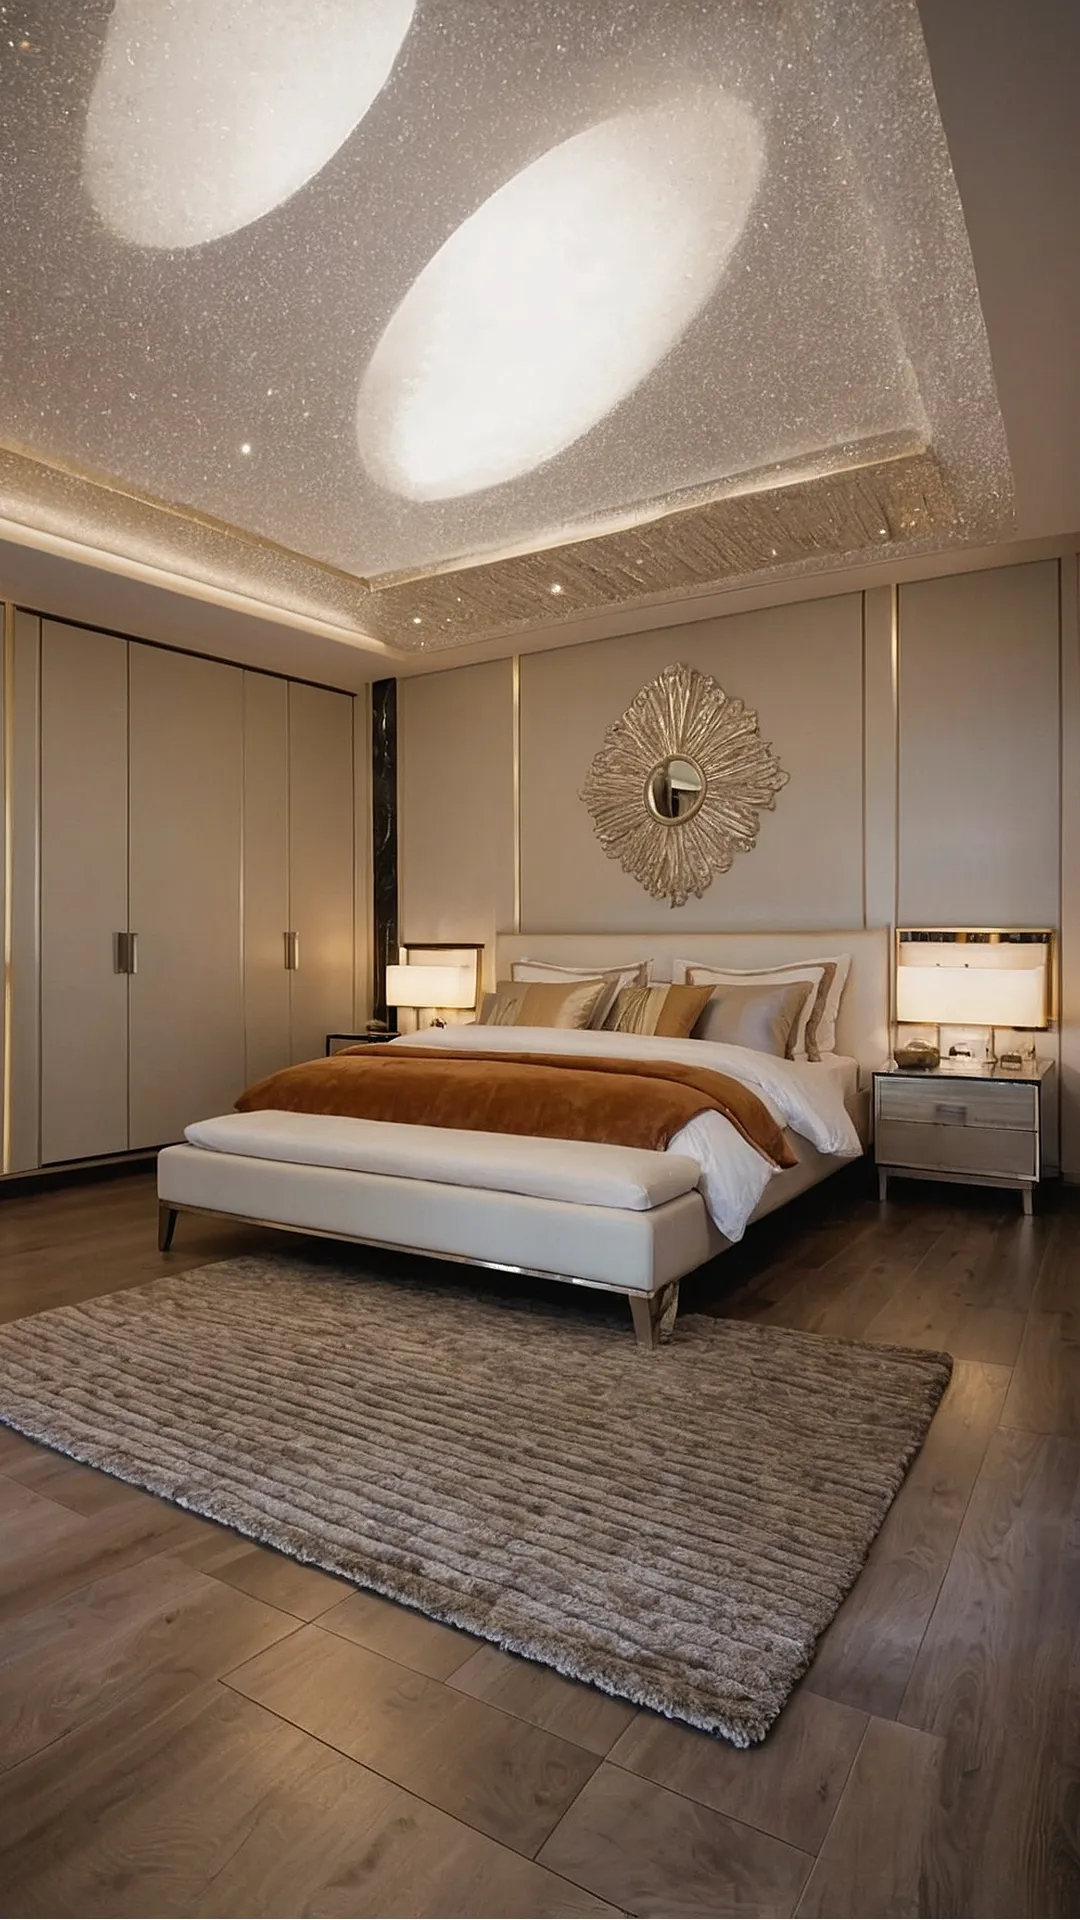 Luxury Retreats: Classy Bedroom Inspirations